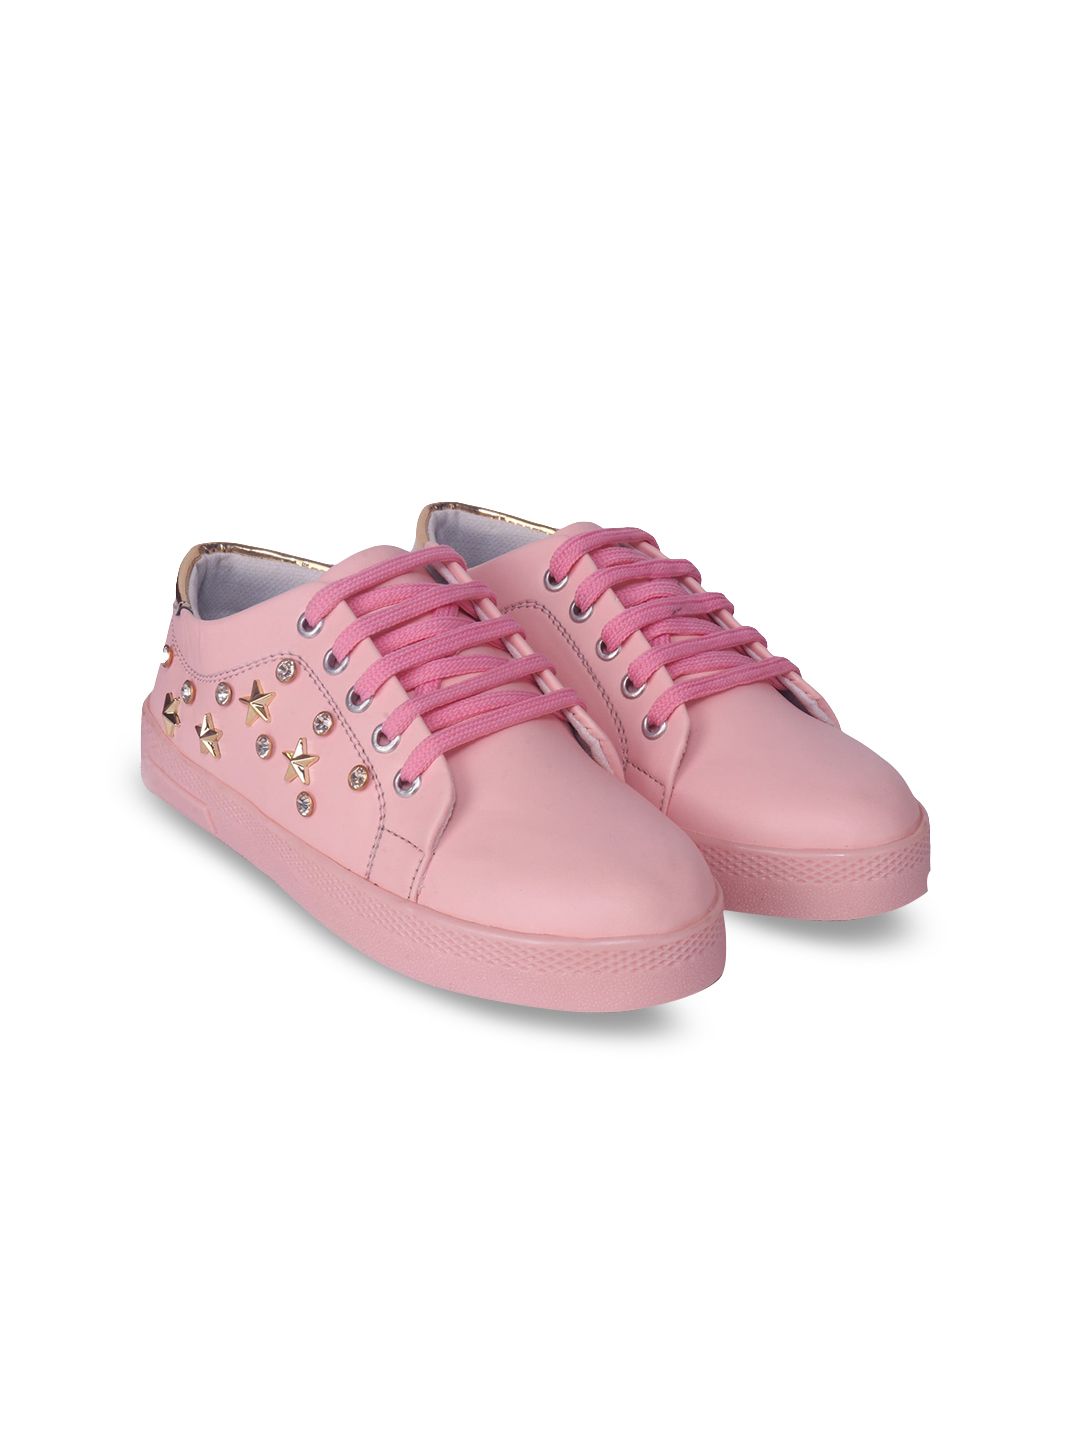 Sanhose Women Pink Embellished Sneakers Price in India